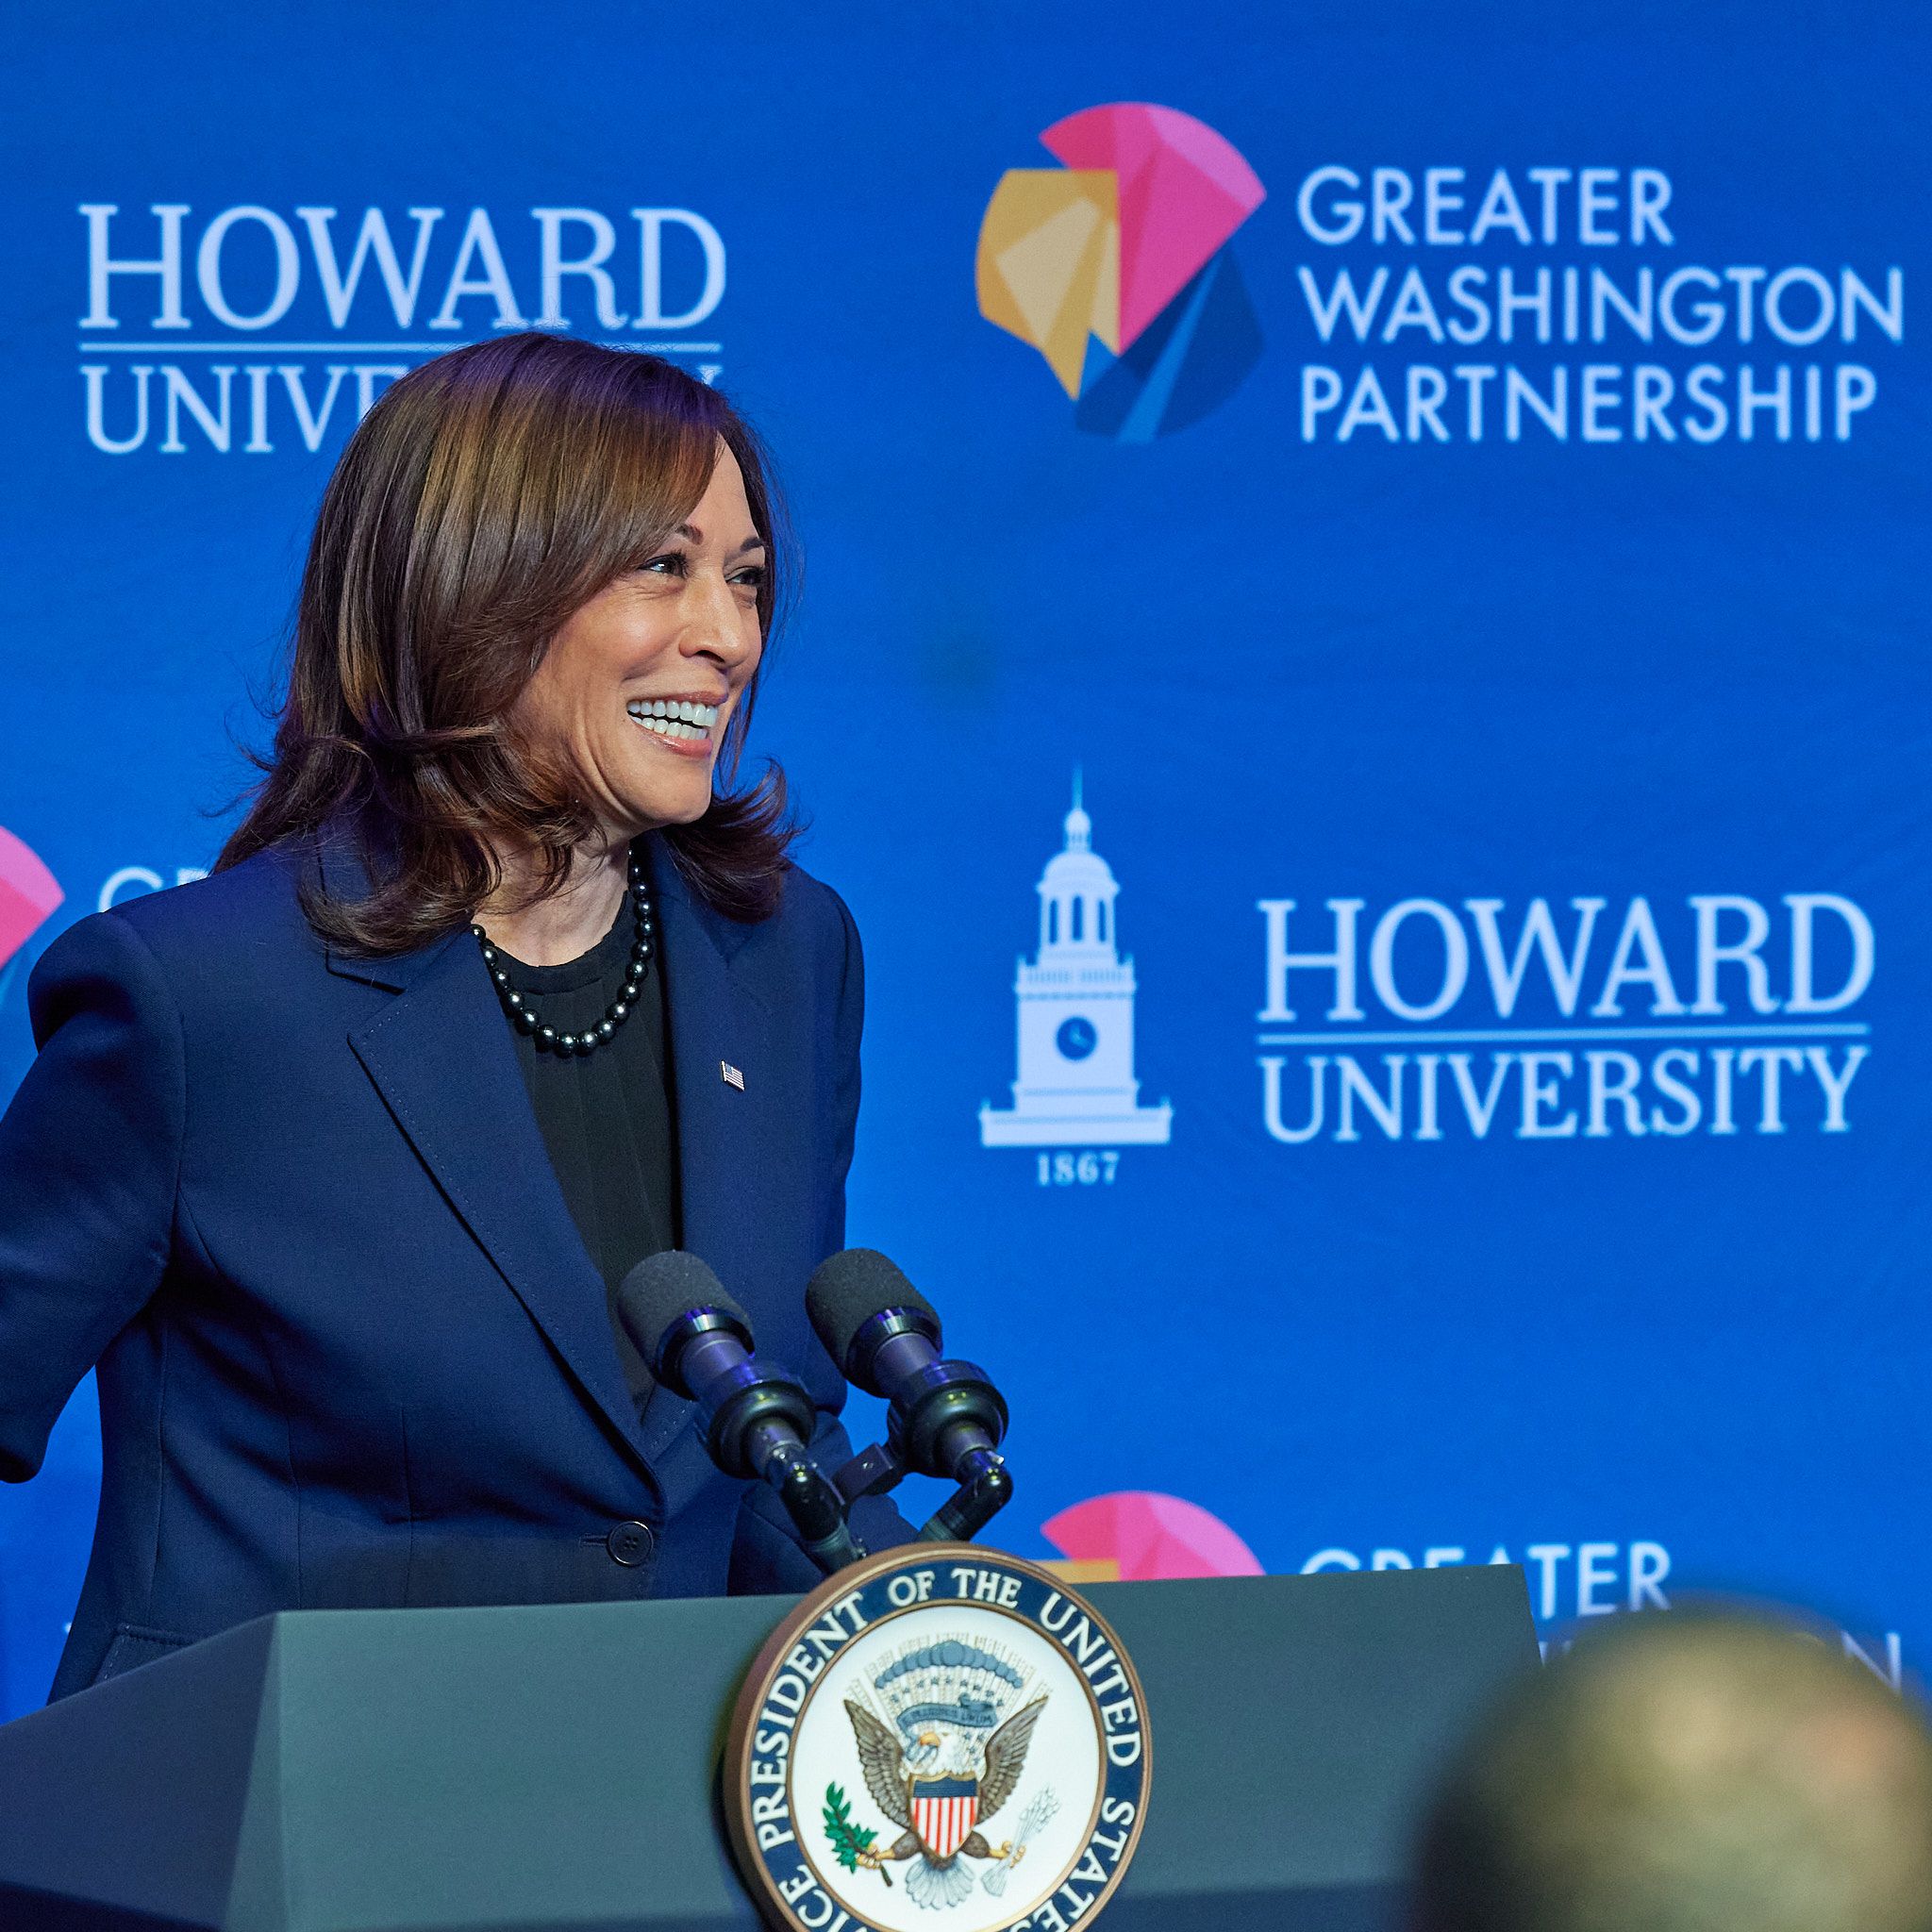 Vice President Kamala Harris makes remarks at her alma mater, Howard University, in Washington, D.C., March 30th, 2022.